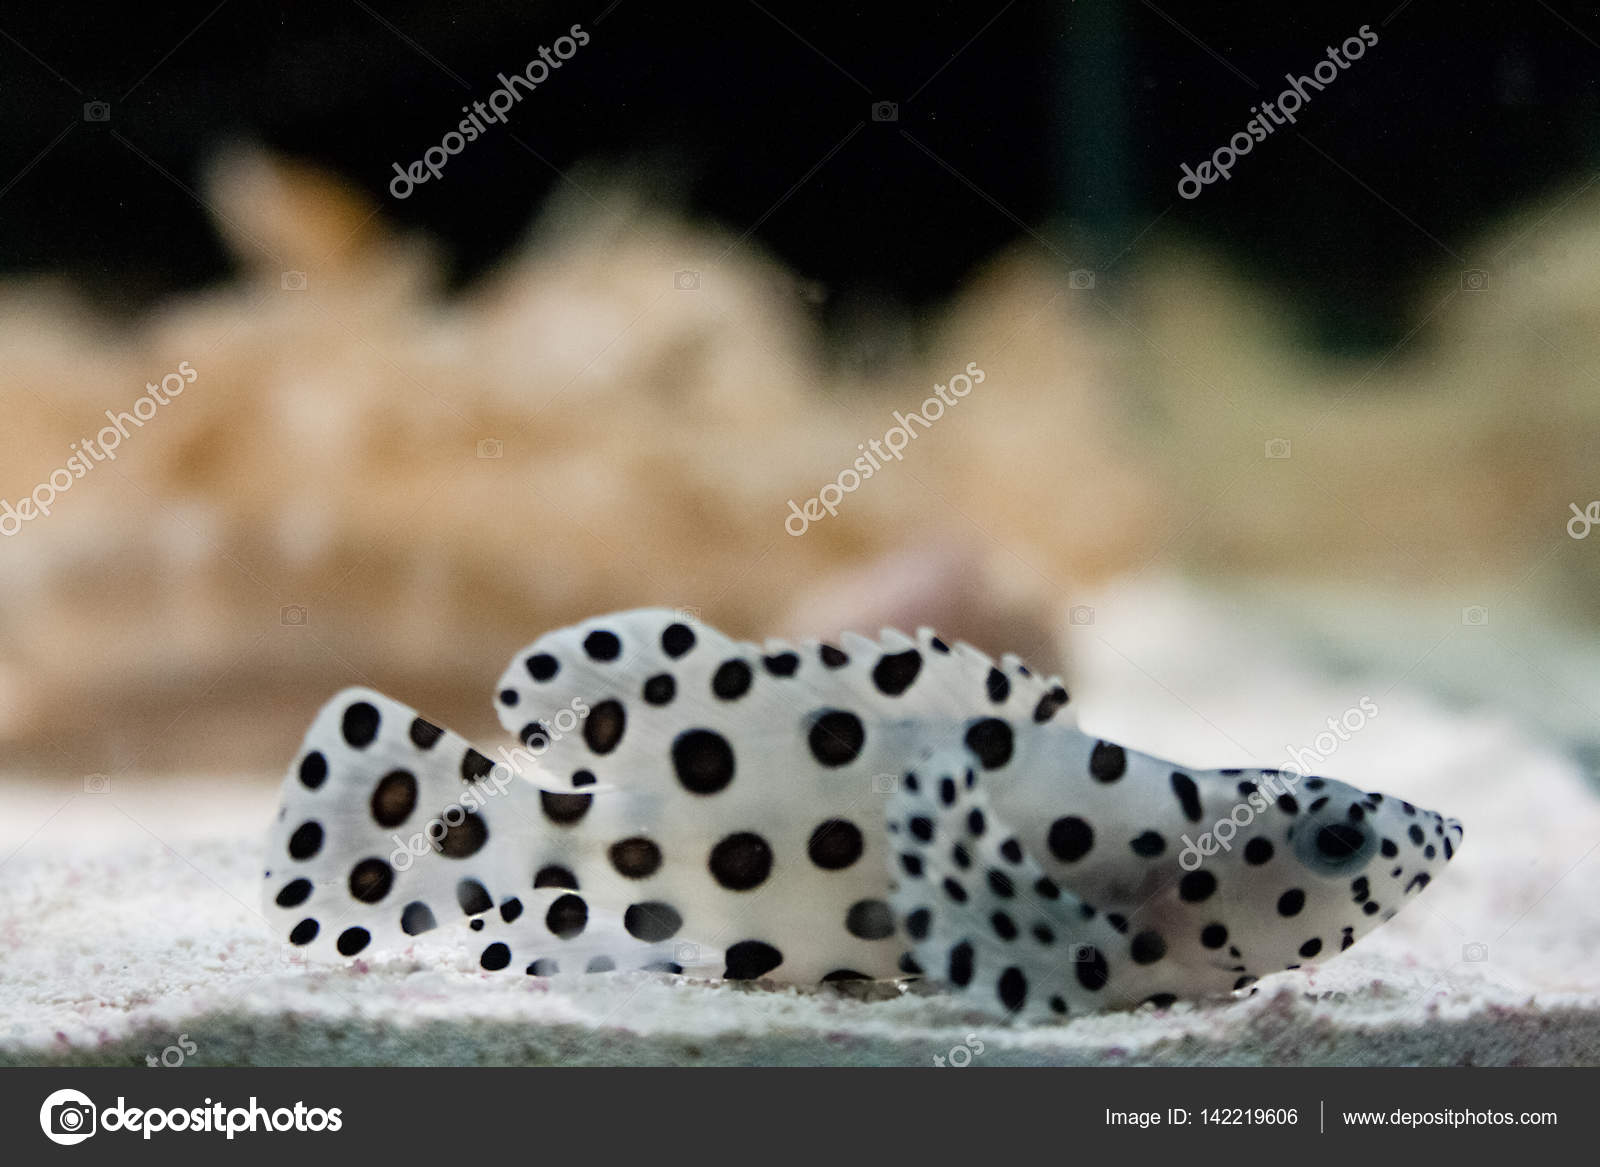 https://st3.depositphotos.com/11588792/14221/i/1600/depositphotos_142219606-stock-photo-young-spotted-panther-grouper-fish.jpg